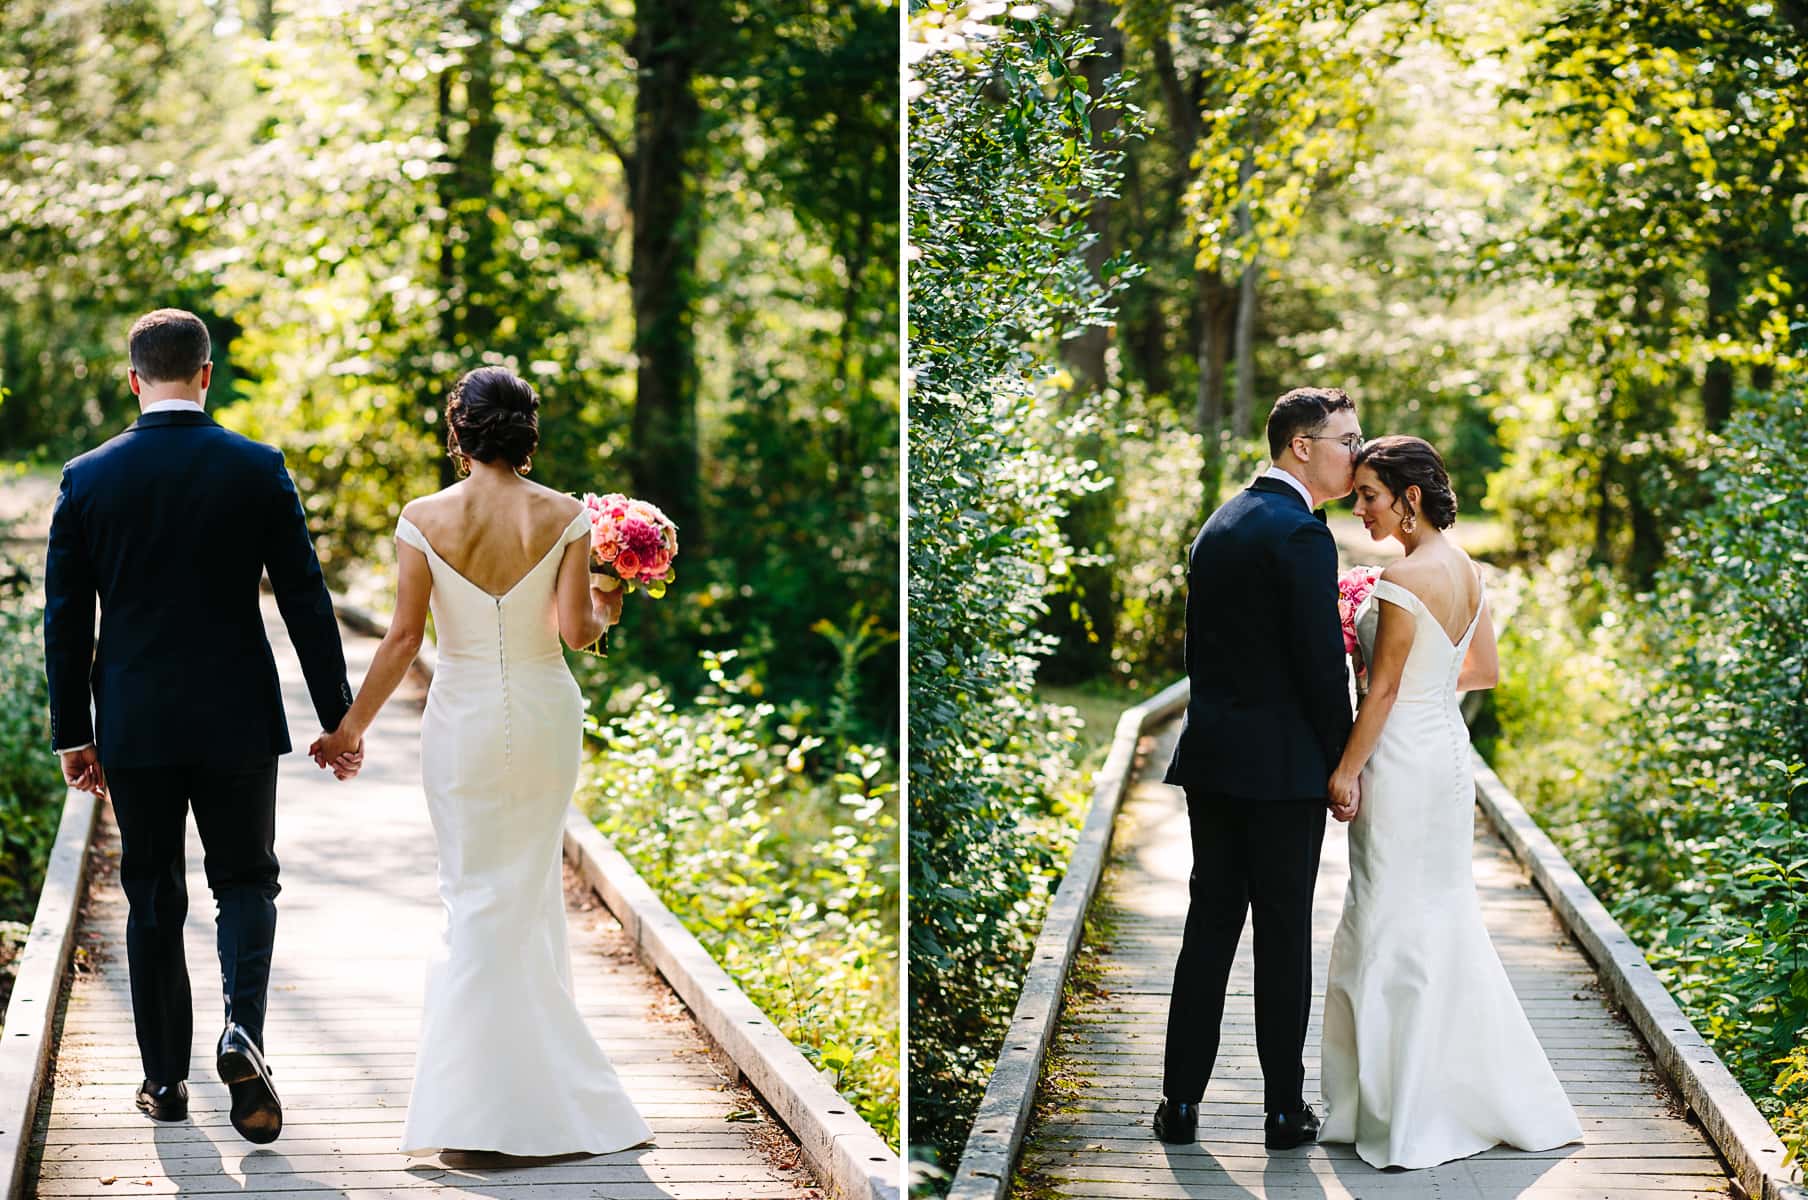 Willowdale Estate wedding in Topsfield, MA | Kelly Benvenuto Photography | Boston Wedding Photographer